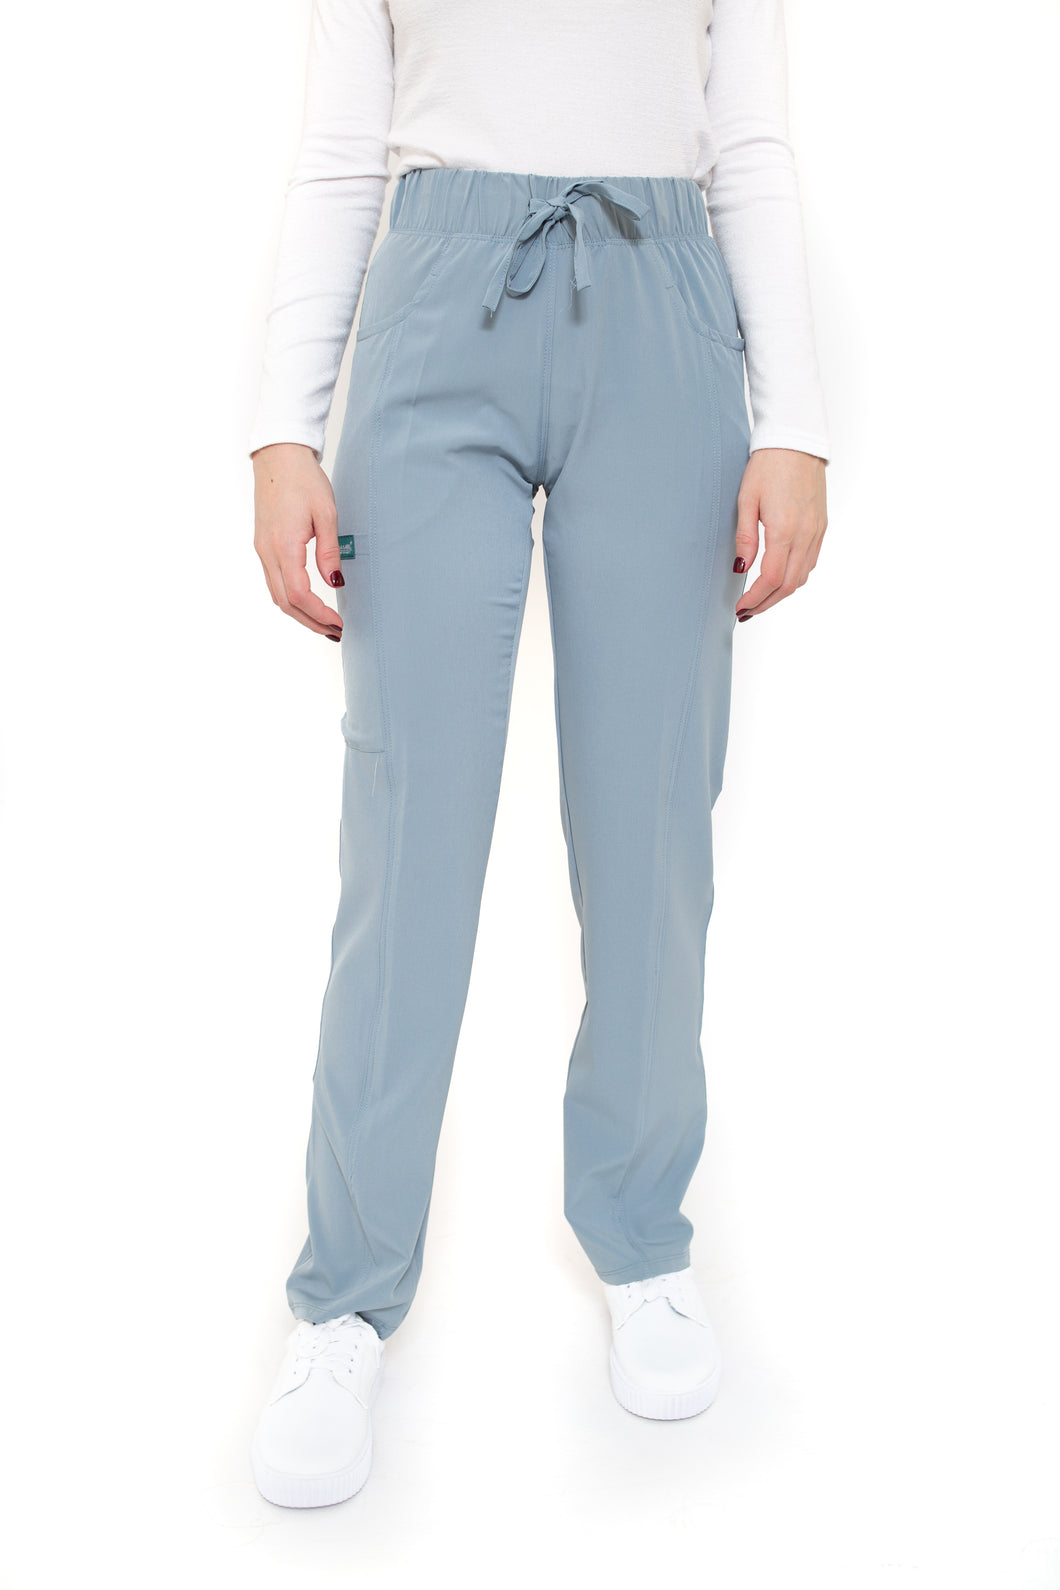 Pantalón Pant EV-120 REPELENTE A FLUIDOS-Color MISTY Dama-Ana Isabel Uniformes